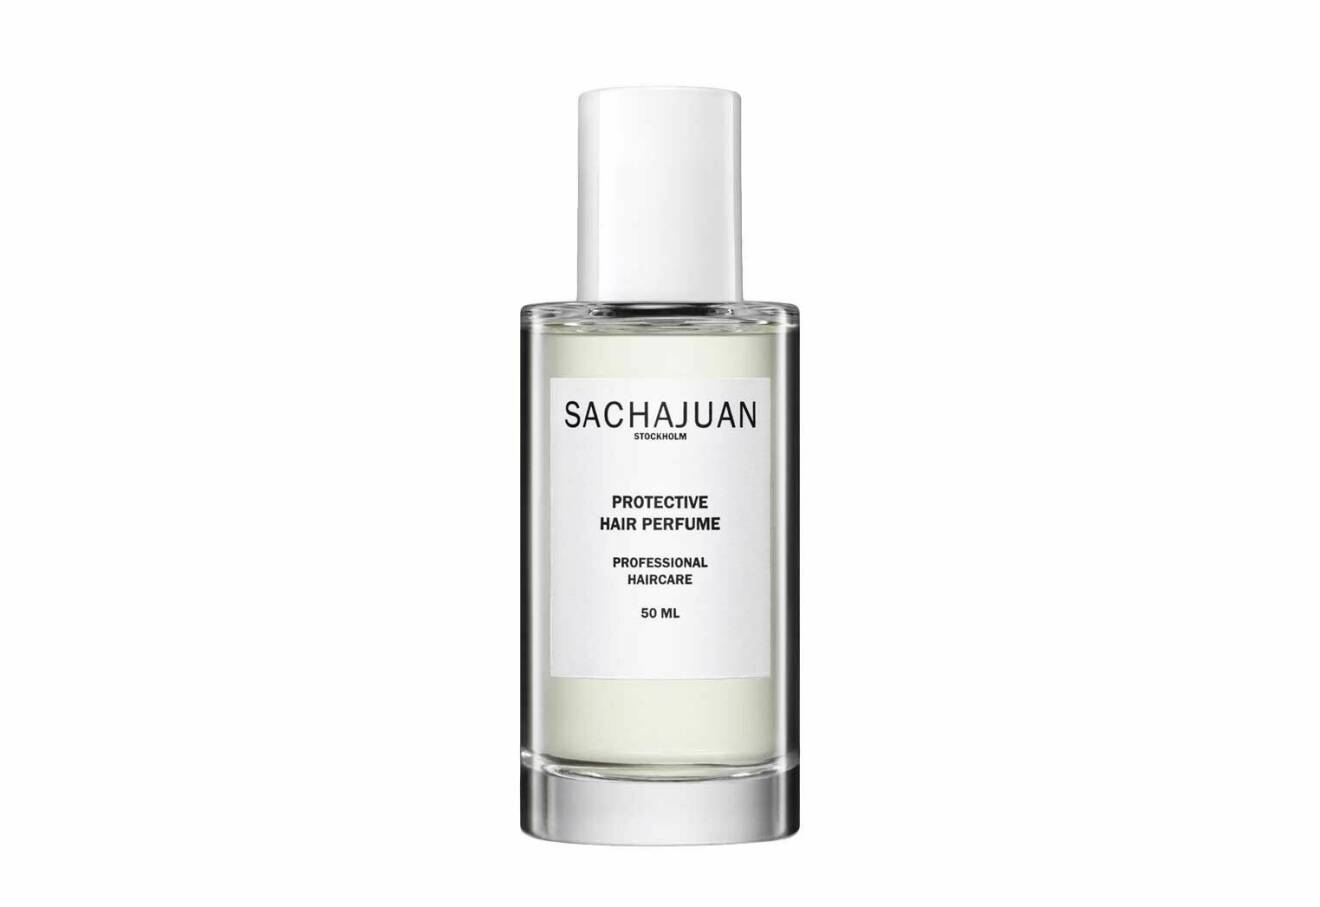 Protective Hair Perfume
Sachajuan.